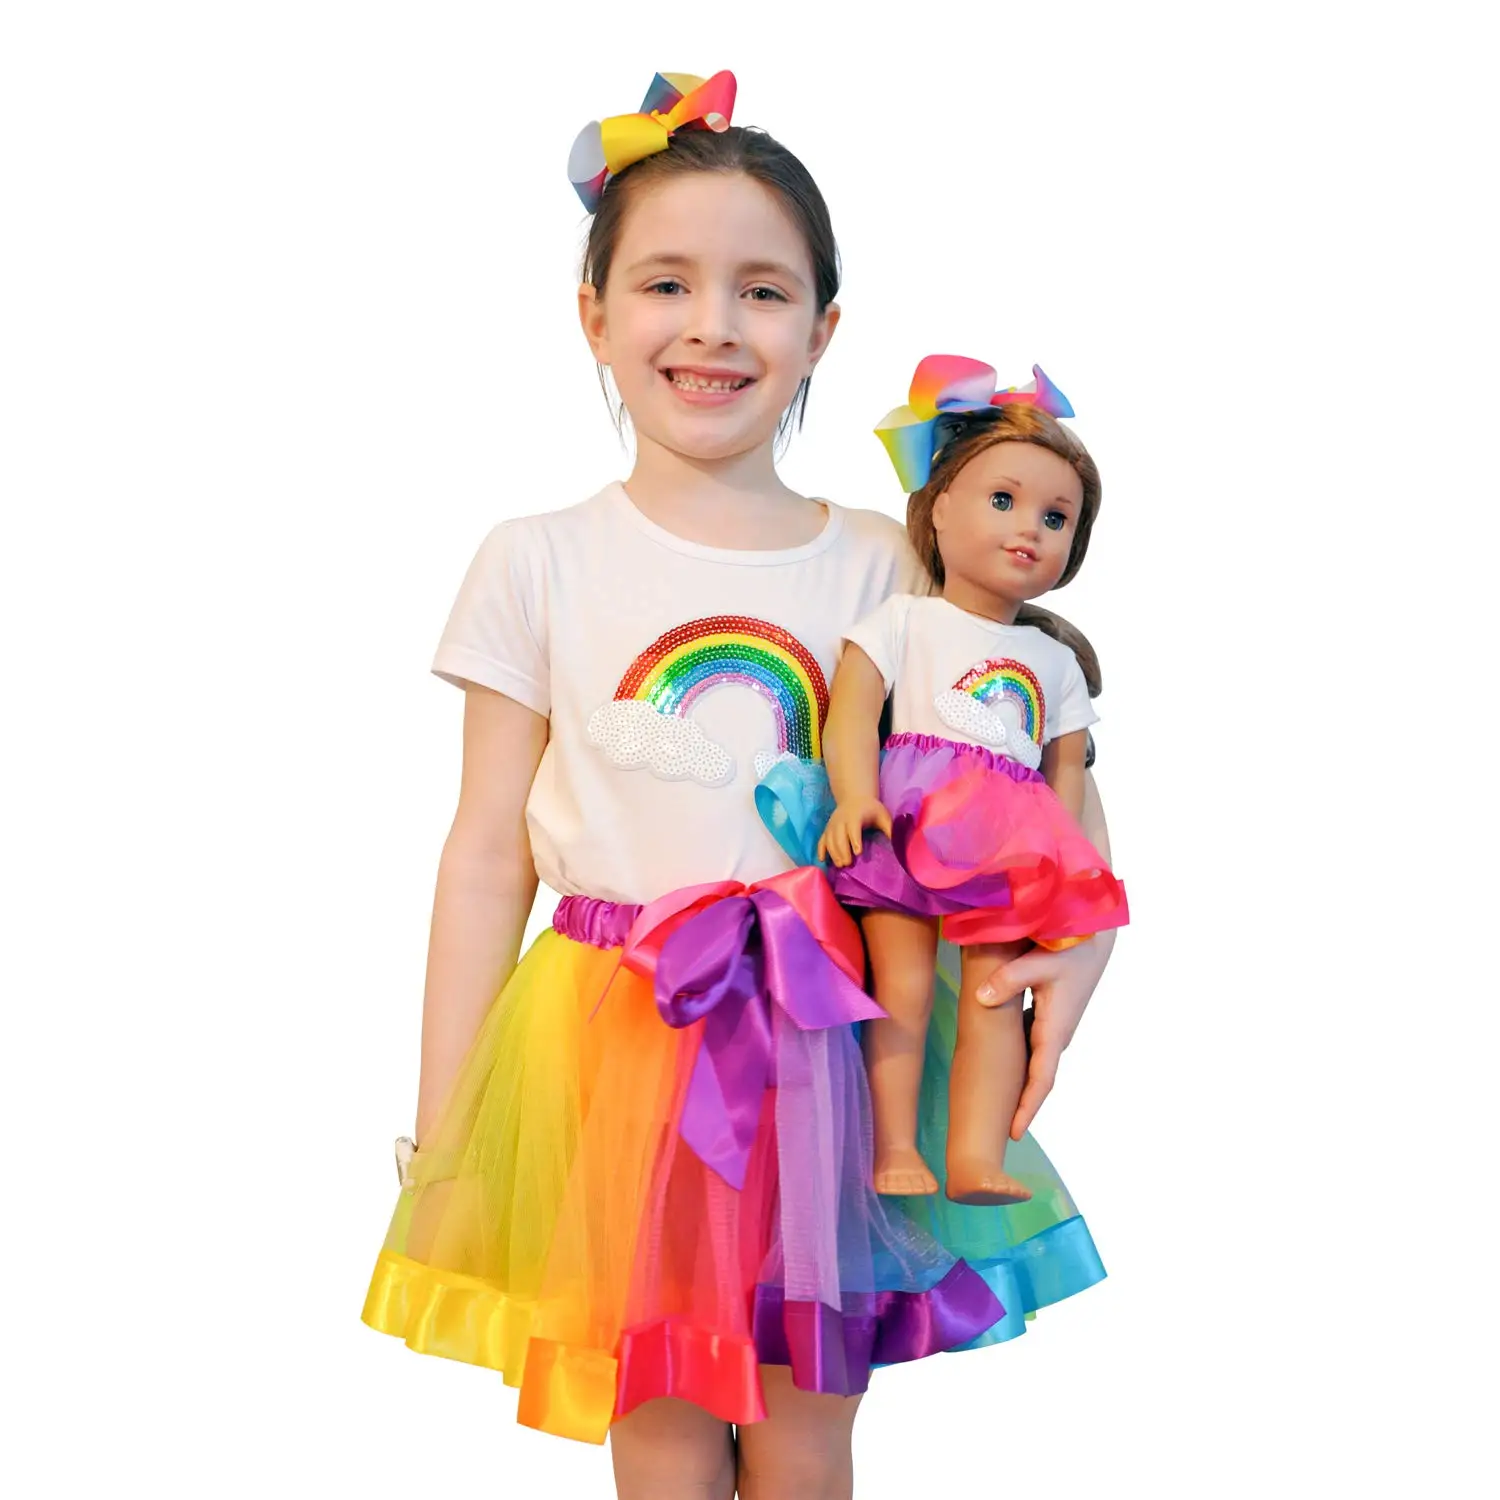 rainbow baby dolls